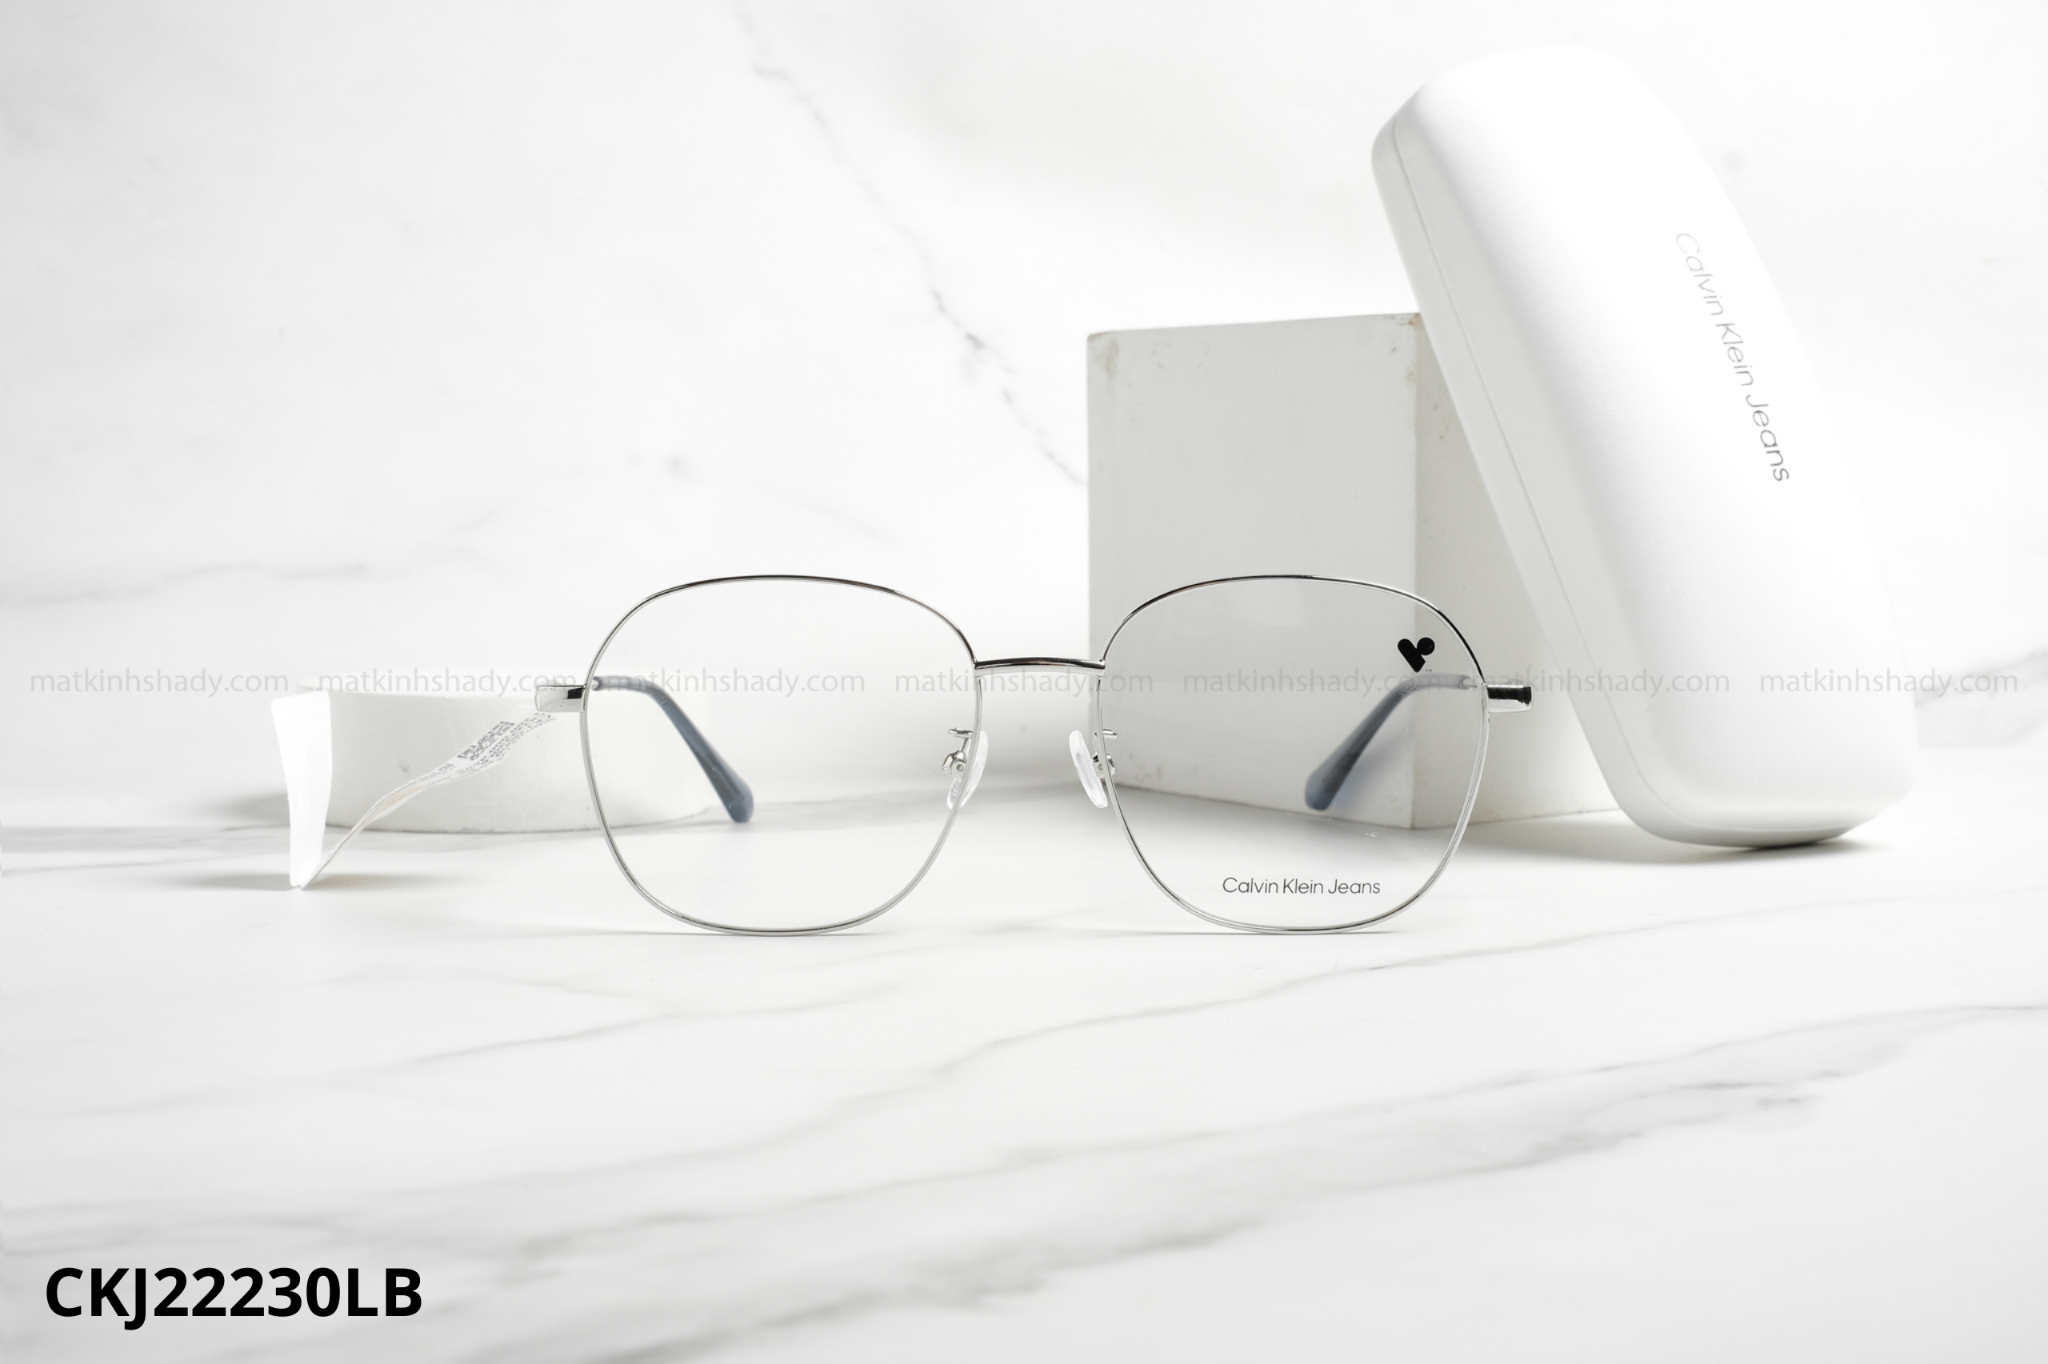  Calvin Klein Eyewear - Glasses - CKJ22230LB 